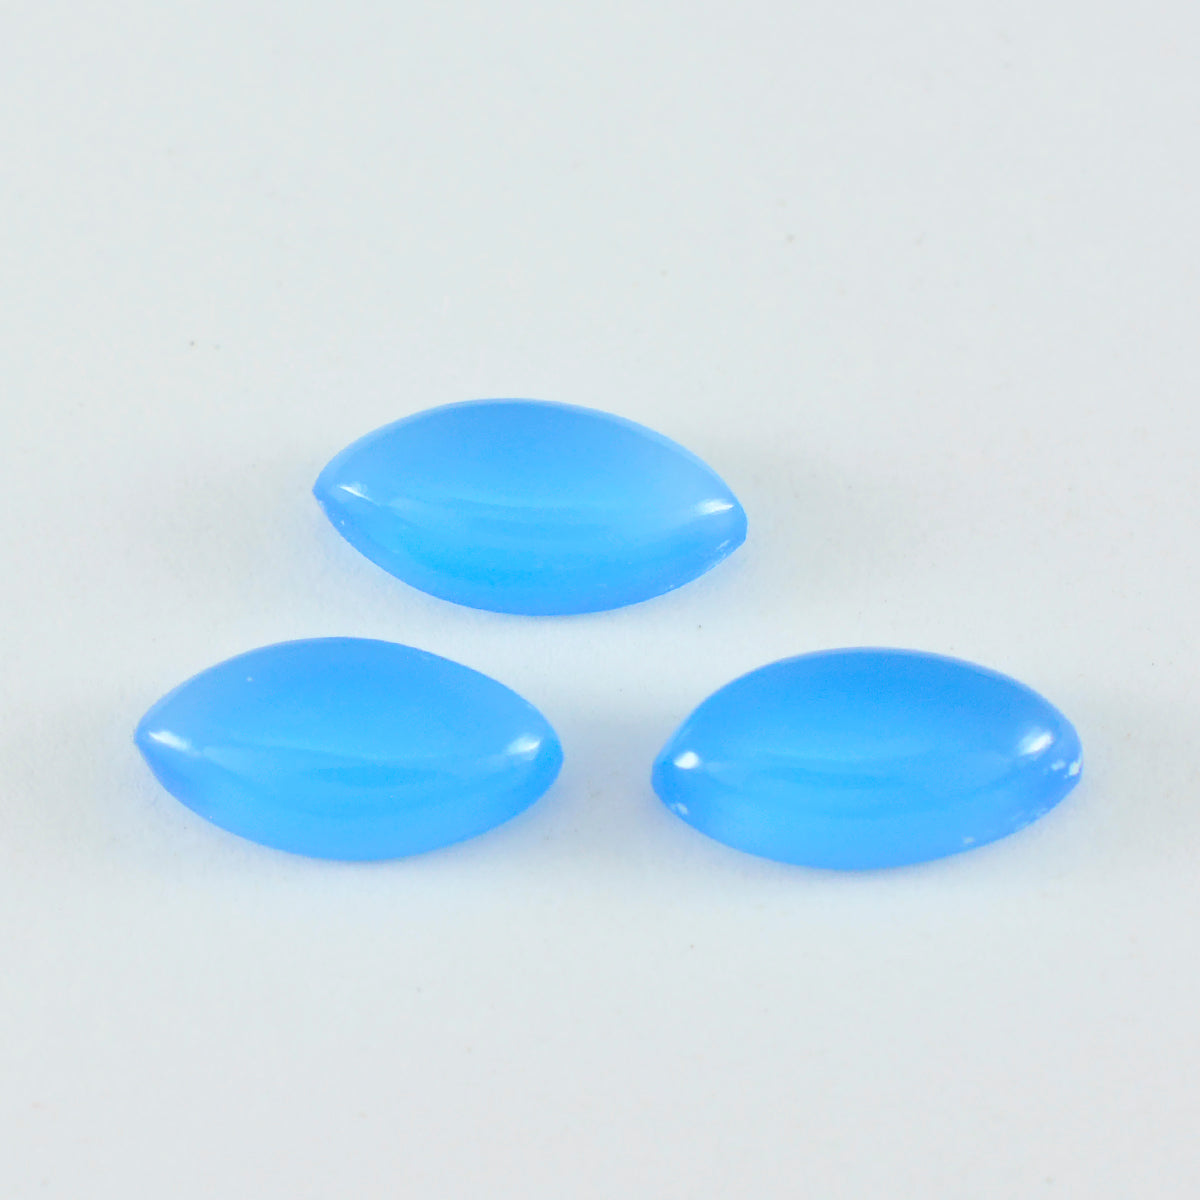 Riyogems 1PC Blue Chalcedony Cabochon 6X12 mm Marquise Shape lovely Quality Loose Gemstone